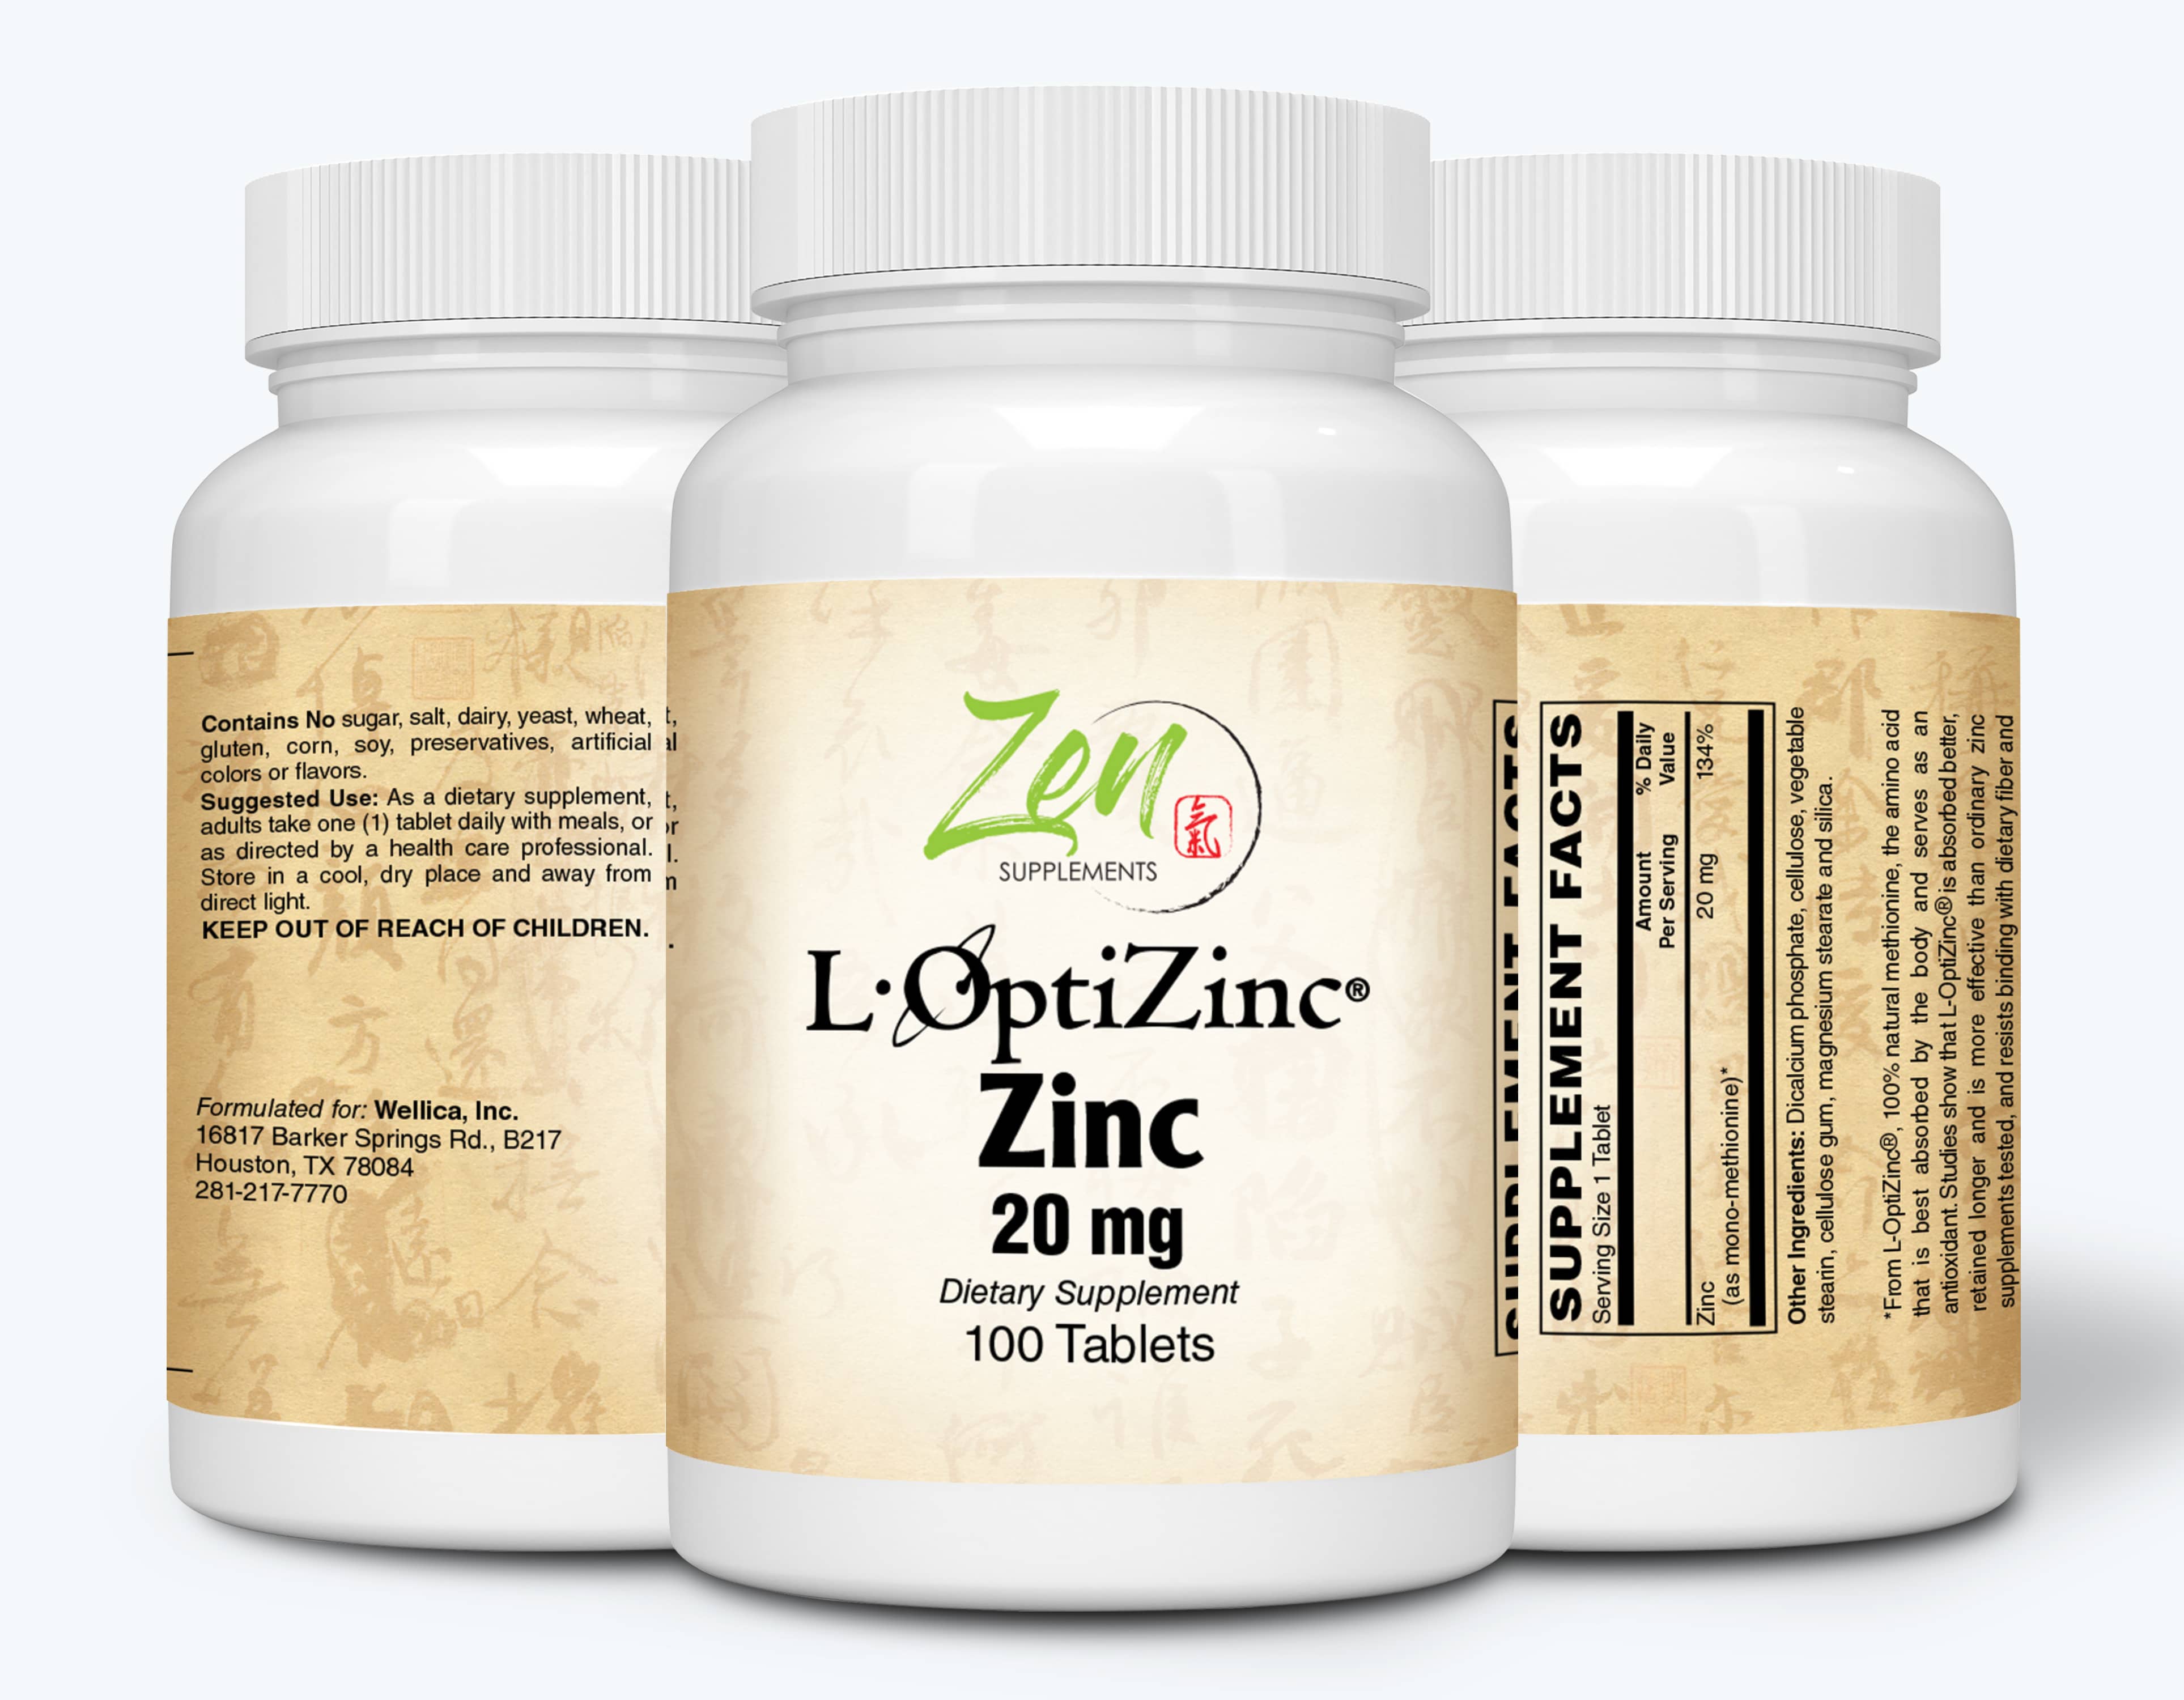 Zinc 20mg - With L-OptiZinc? - 100 Tabs